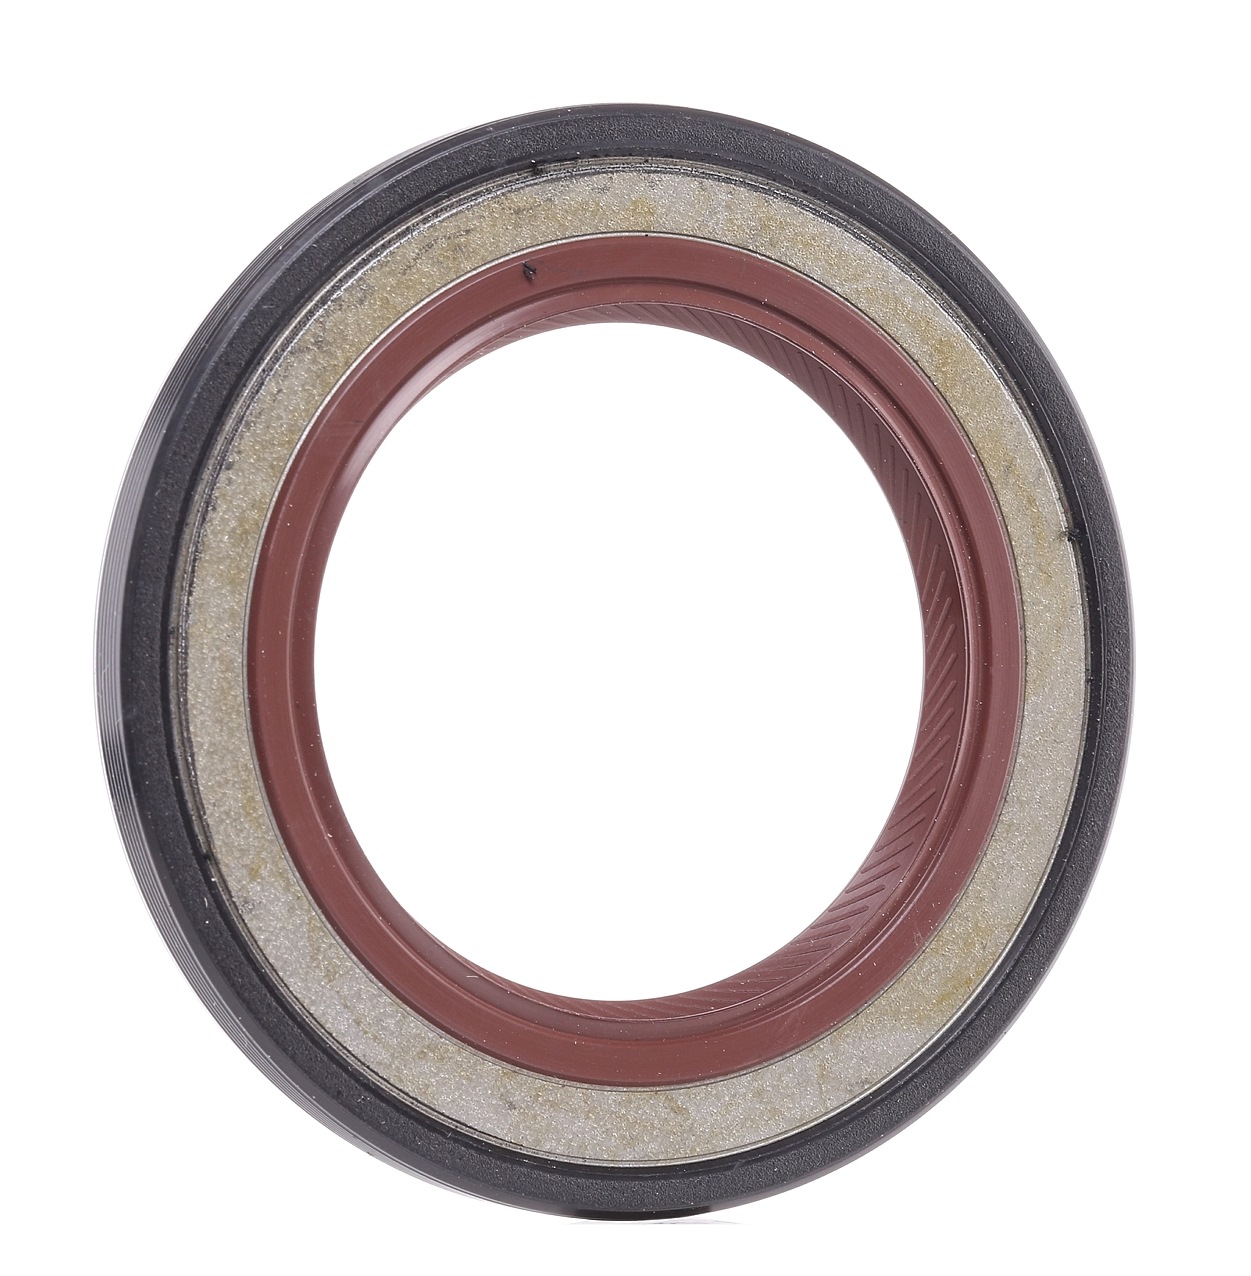 CORTECO 20018081B Crankshaft seal frontal sided, FPM (fluoride rubber)/ACM (polyacrylate rubber)